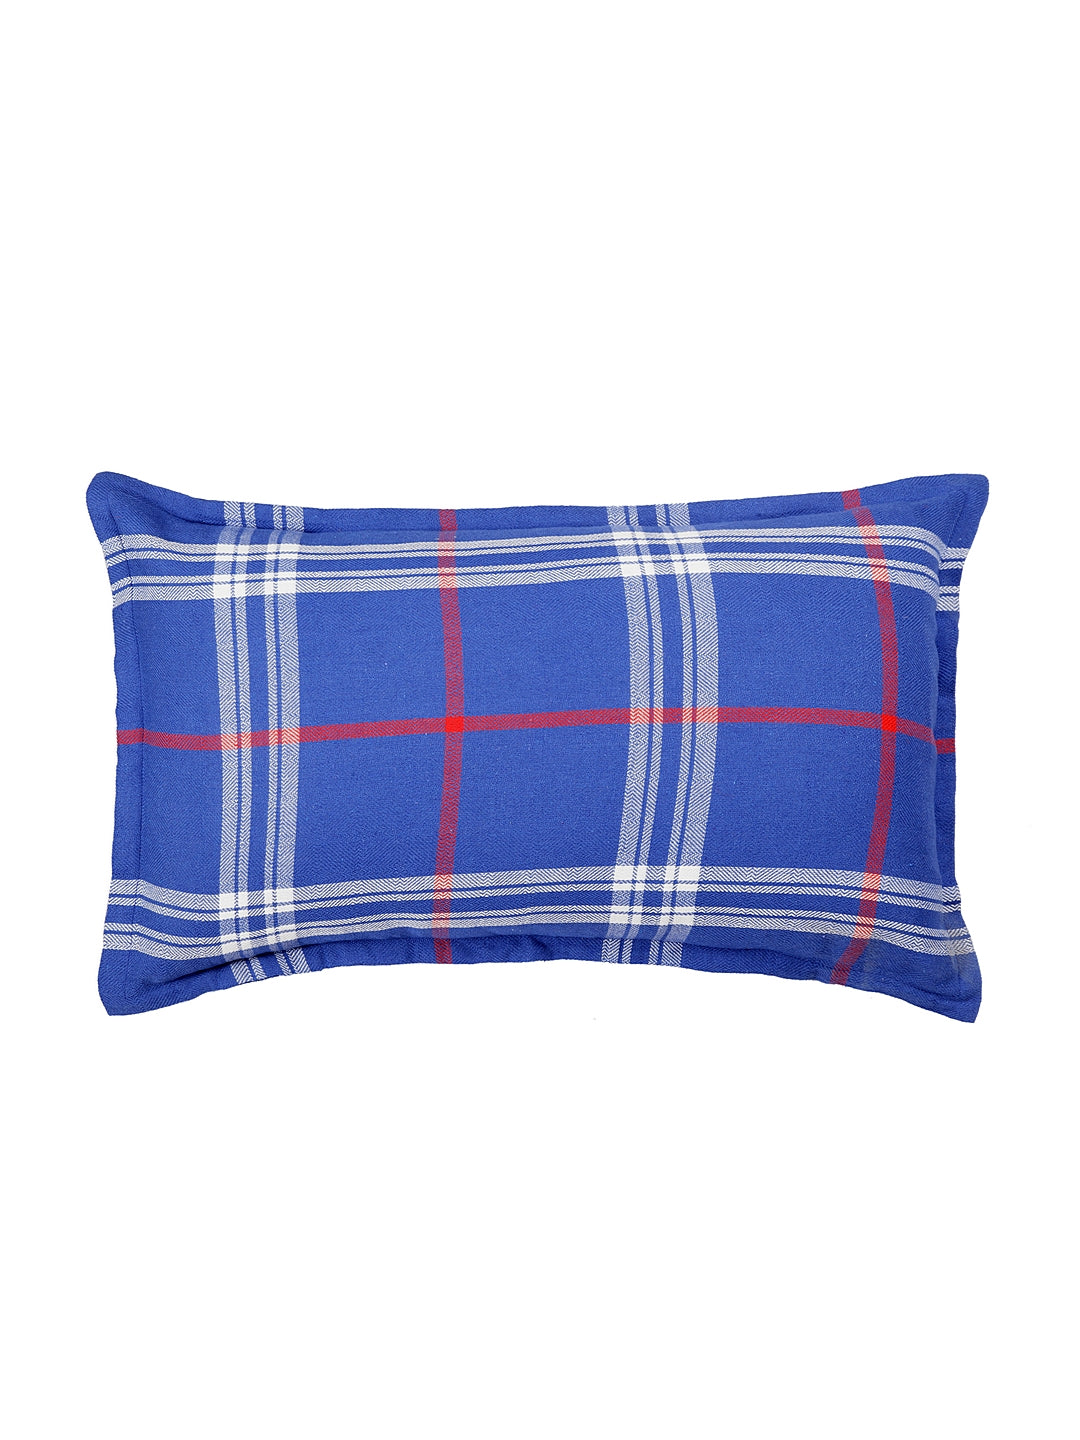 KLOTTHE Set of 2 Blue Cotton Jacquard Pillow Covers (45X70 cm)